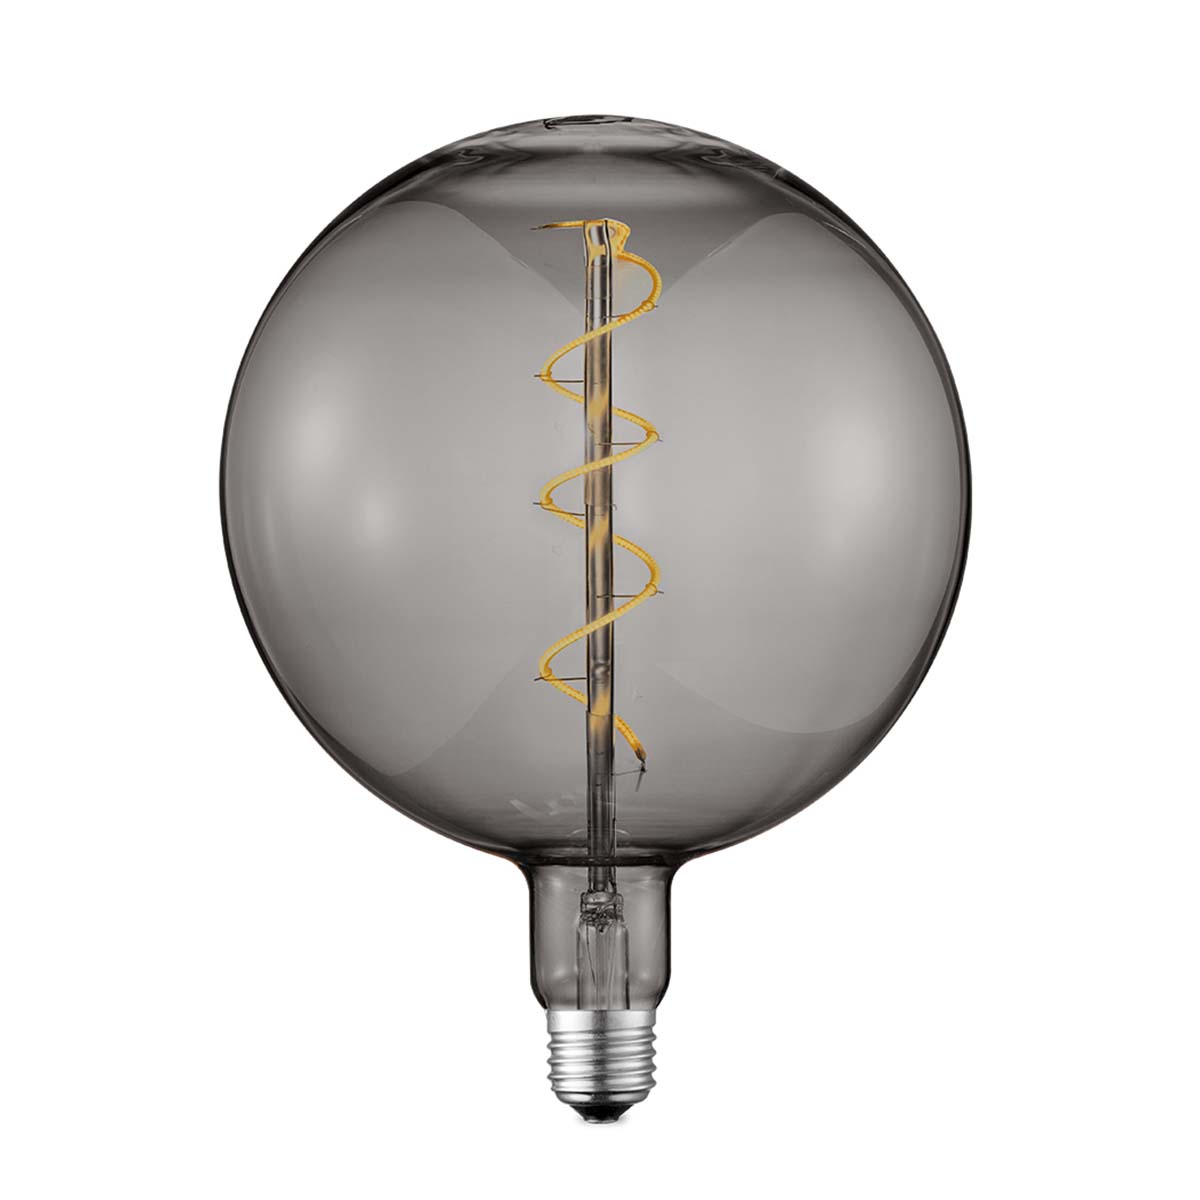 Tangla lighting - TLB-8011-04SM - LED Light Bulb Single Spiral filament - G150 4W smoke- large - dimmable - E27